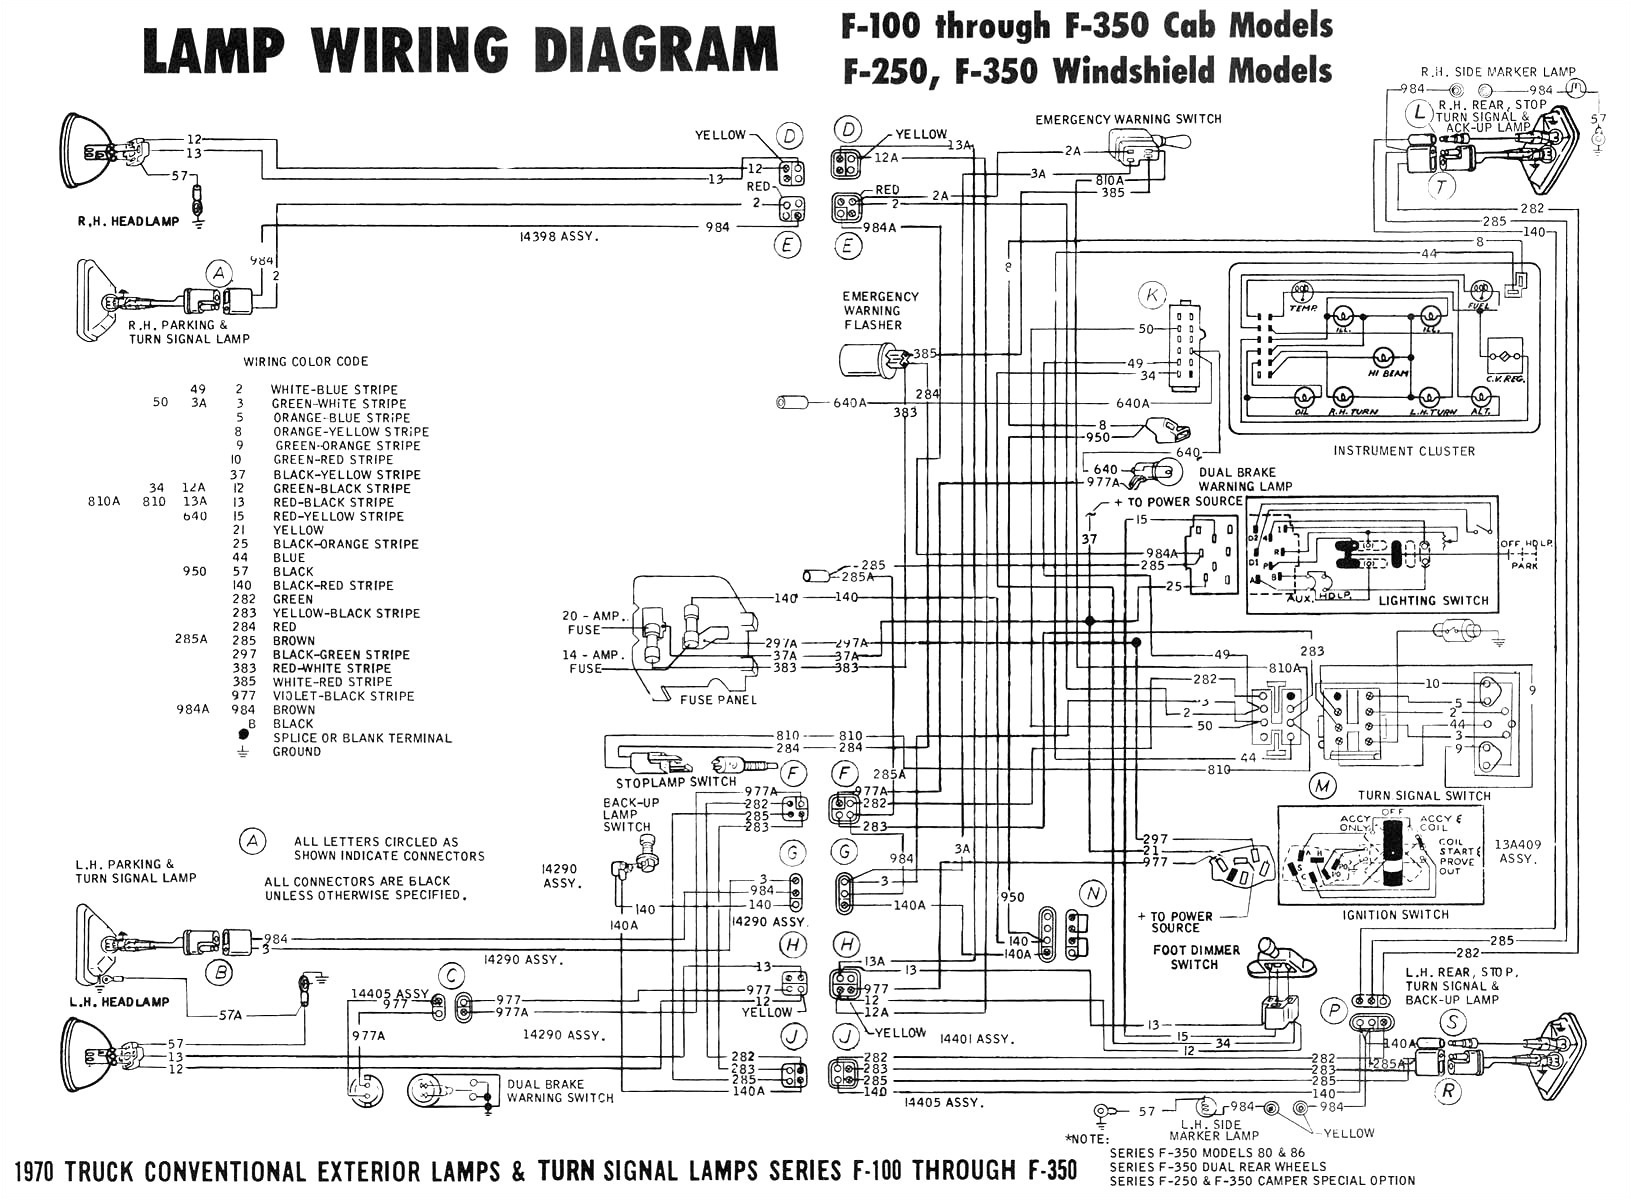 fuse layoutcar wiring diagram page 93 wiring diagrams global fuse layoutcar wiring diagram page 93